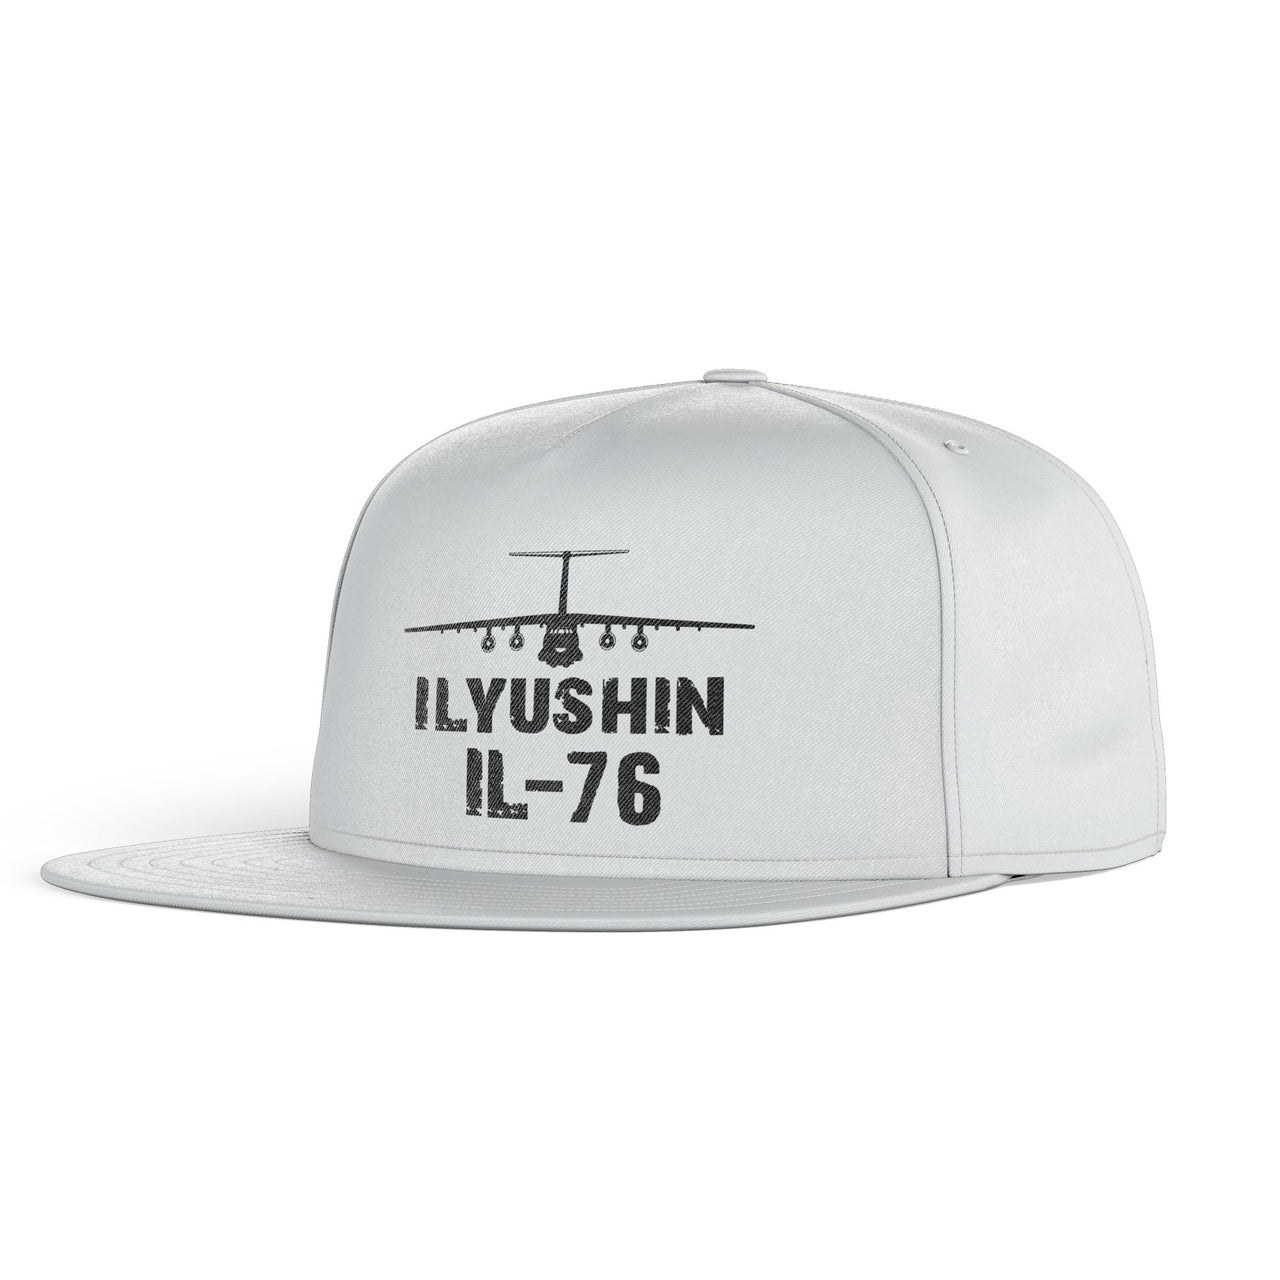 ILyushin IL-76 & Plane Designed Snapback Caps & Hats